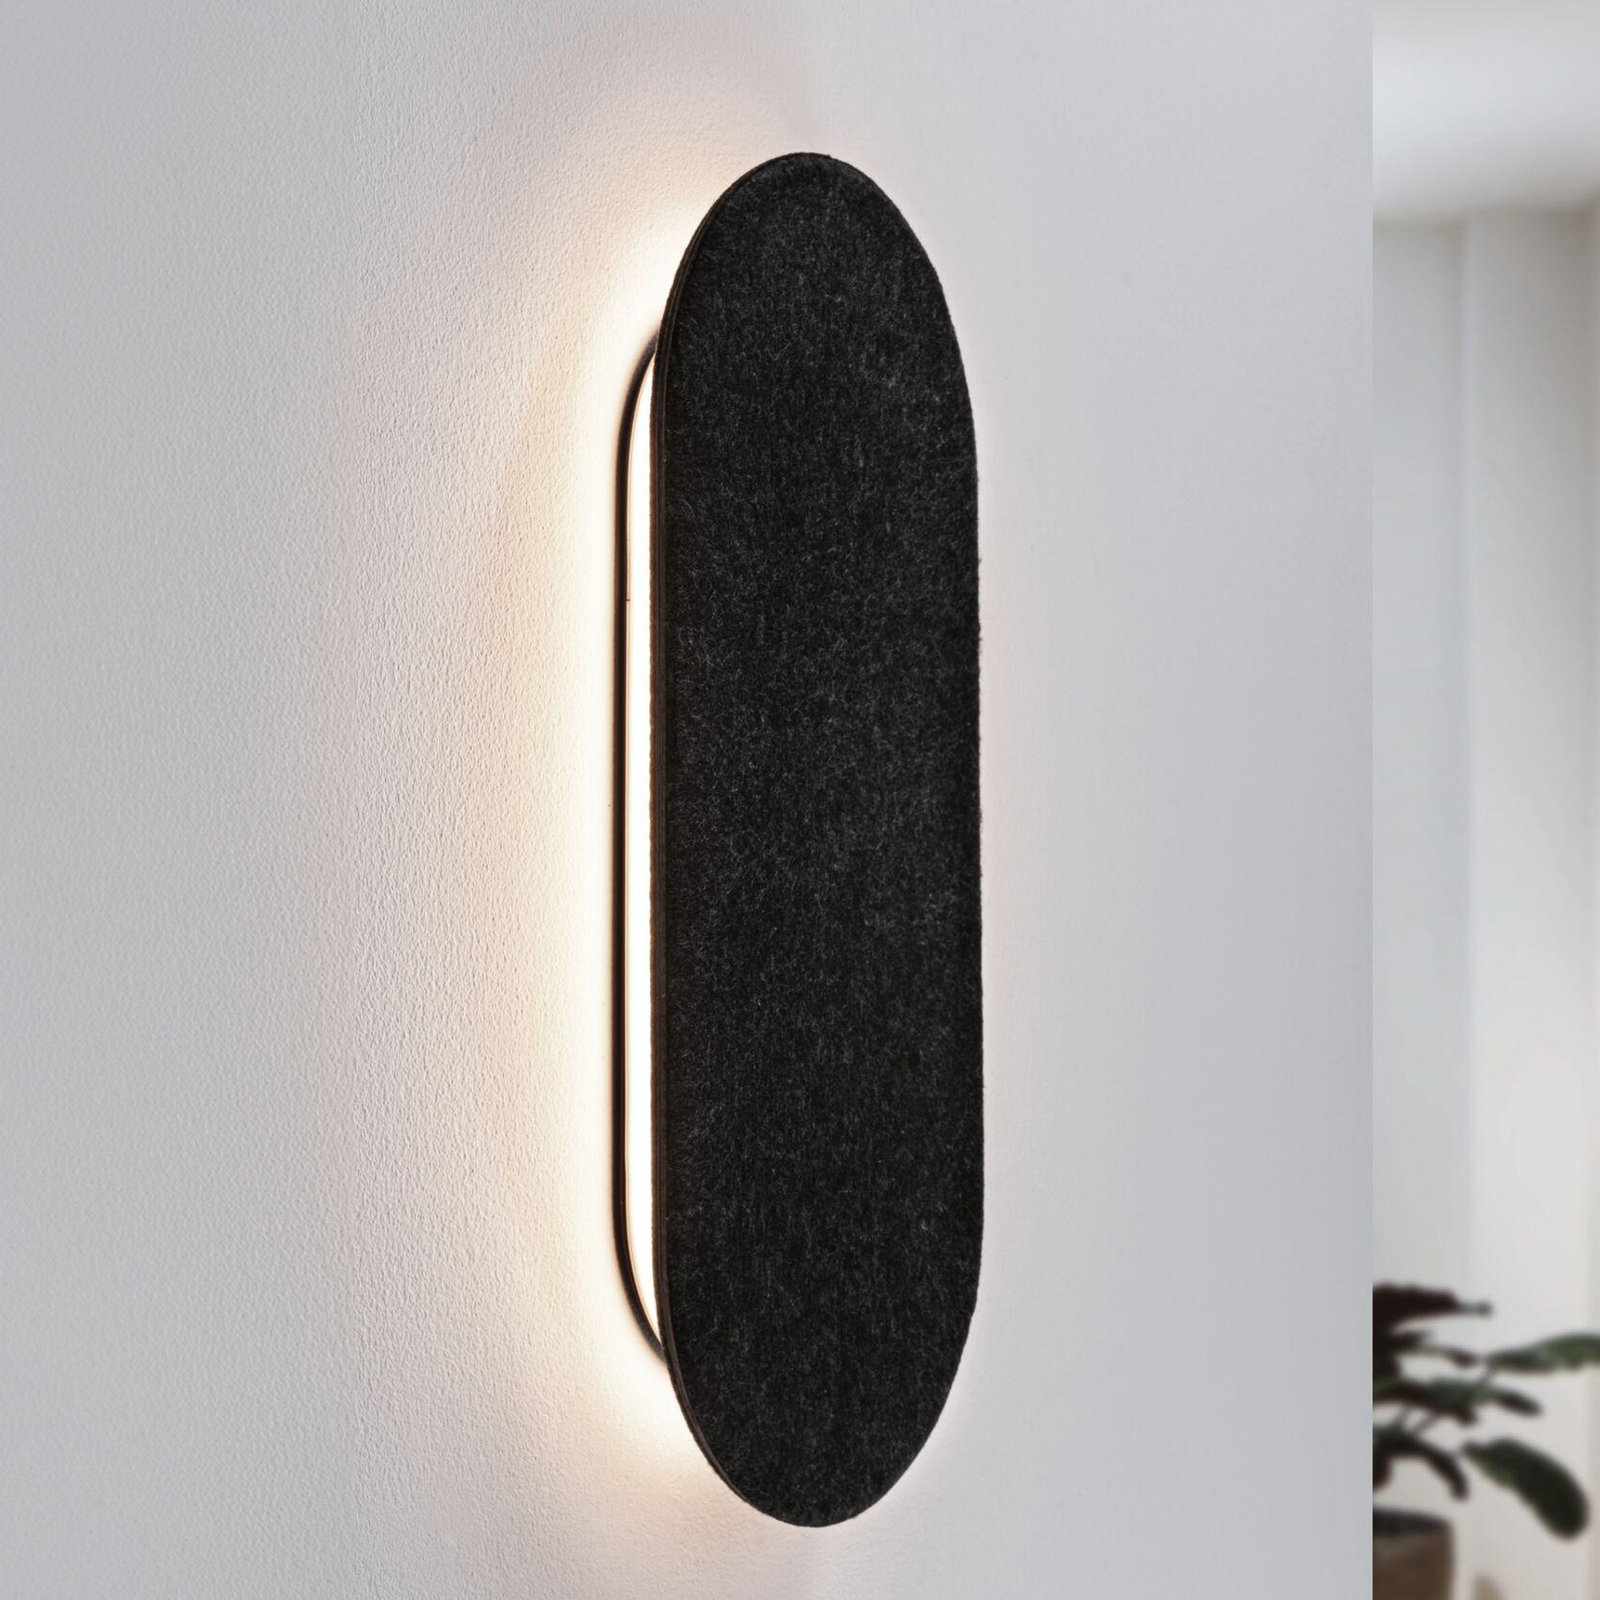 Paulmann LED wall light Tulga, 45 x 20 cm, anthracite, felt